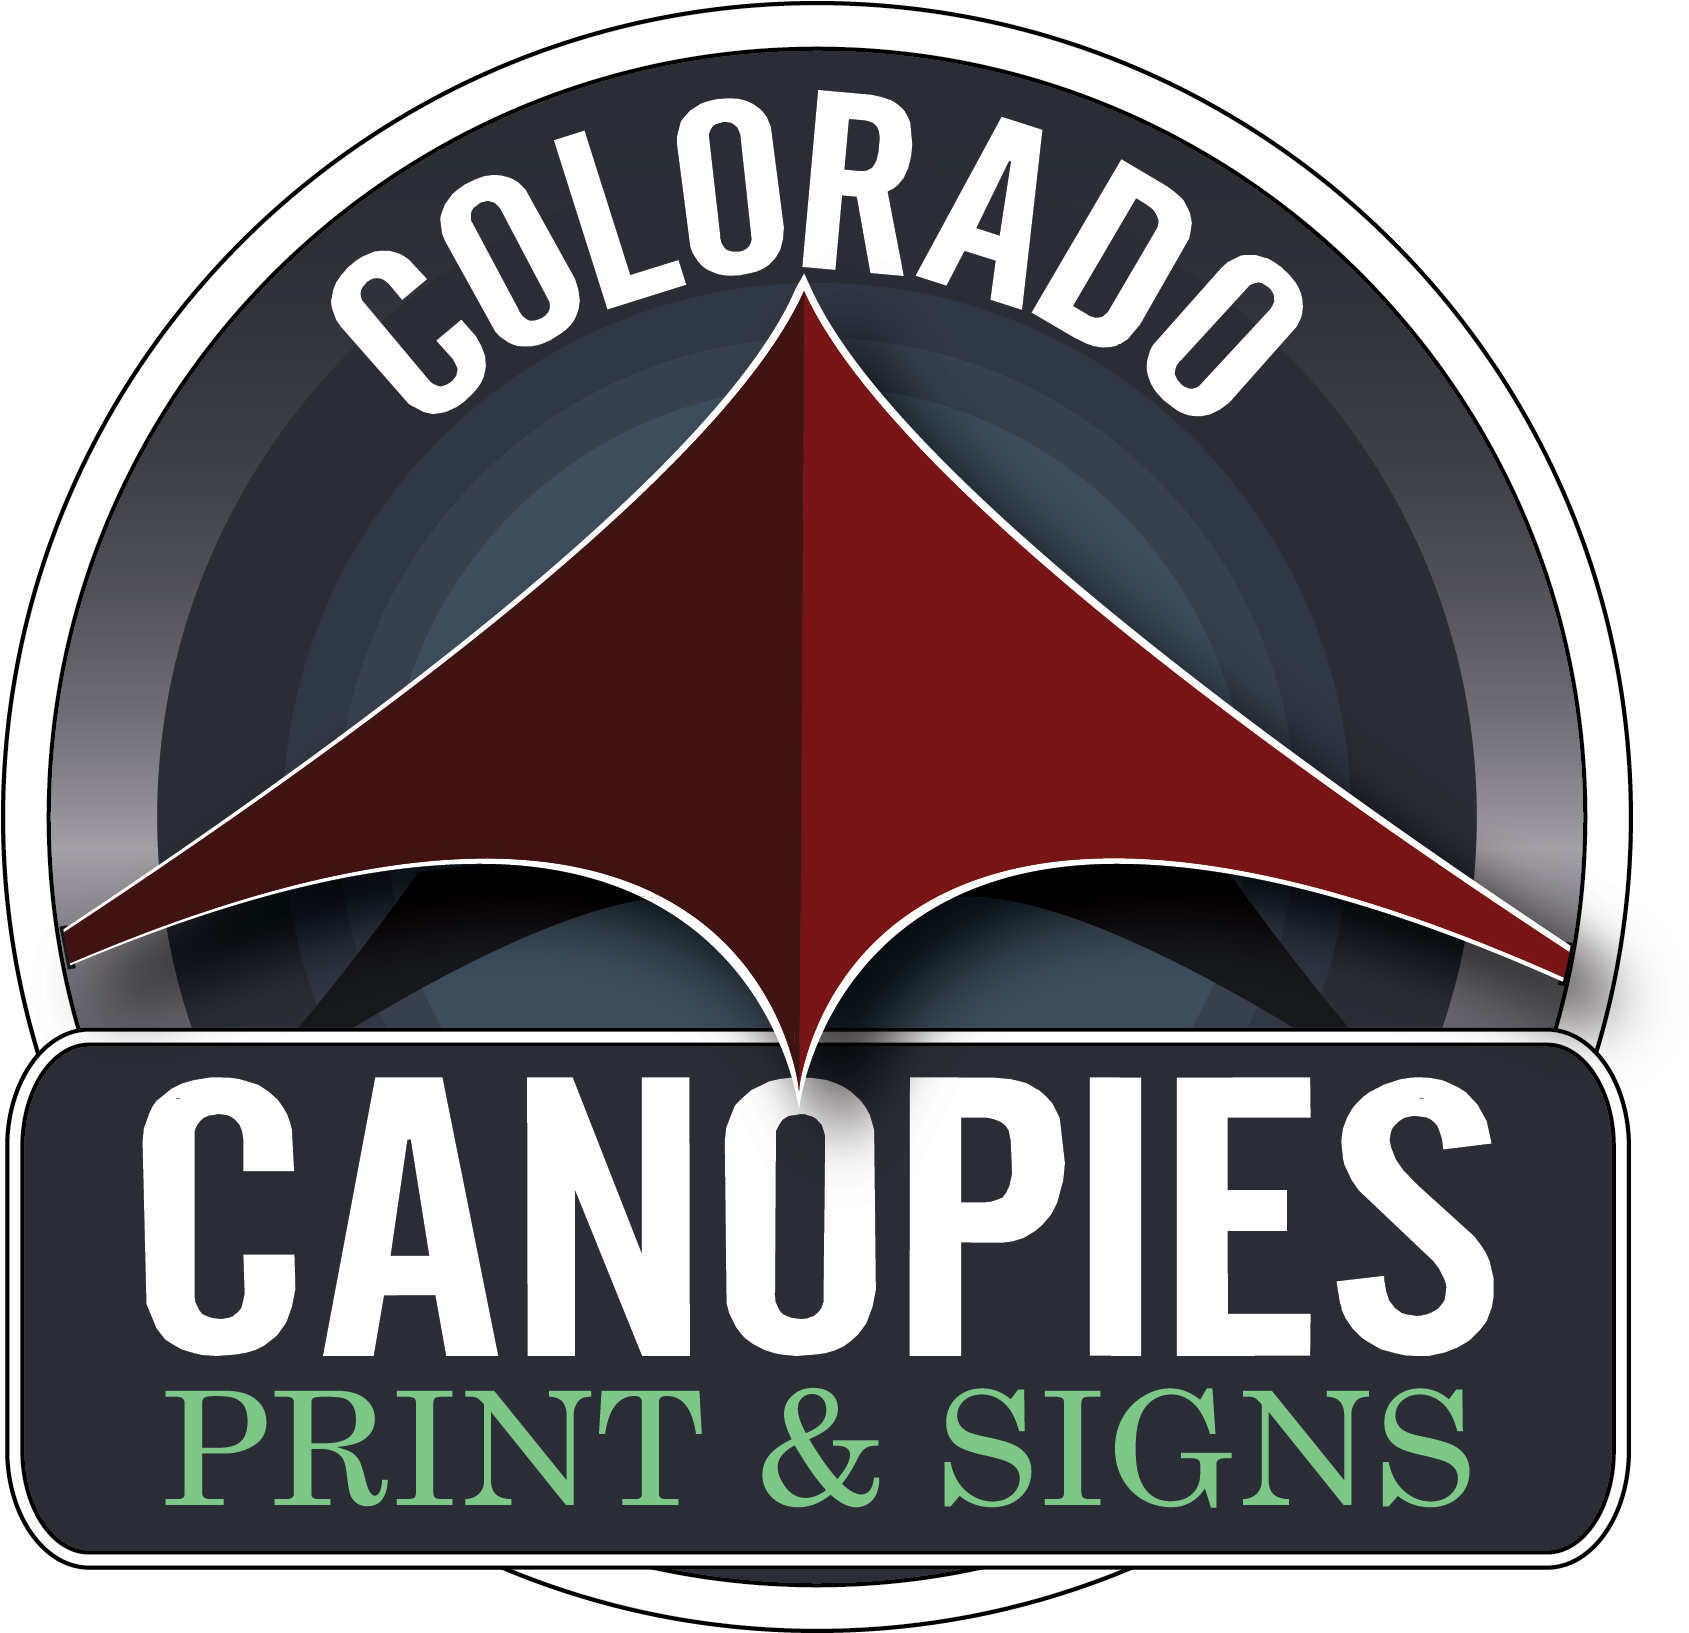 Colorado Canopies - Chicago Cubs (1707x1632)